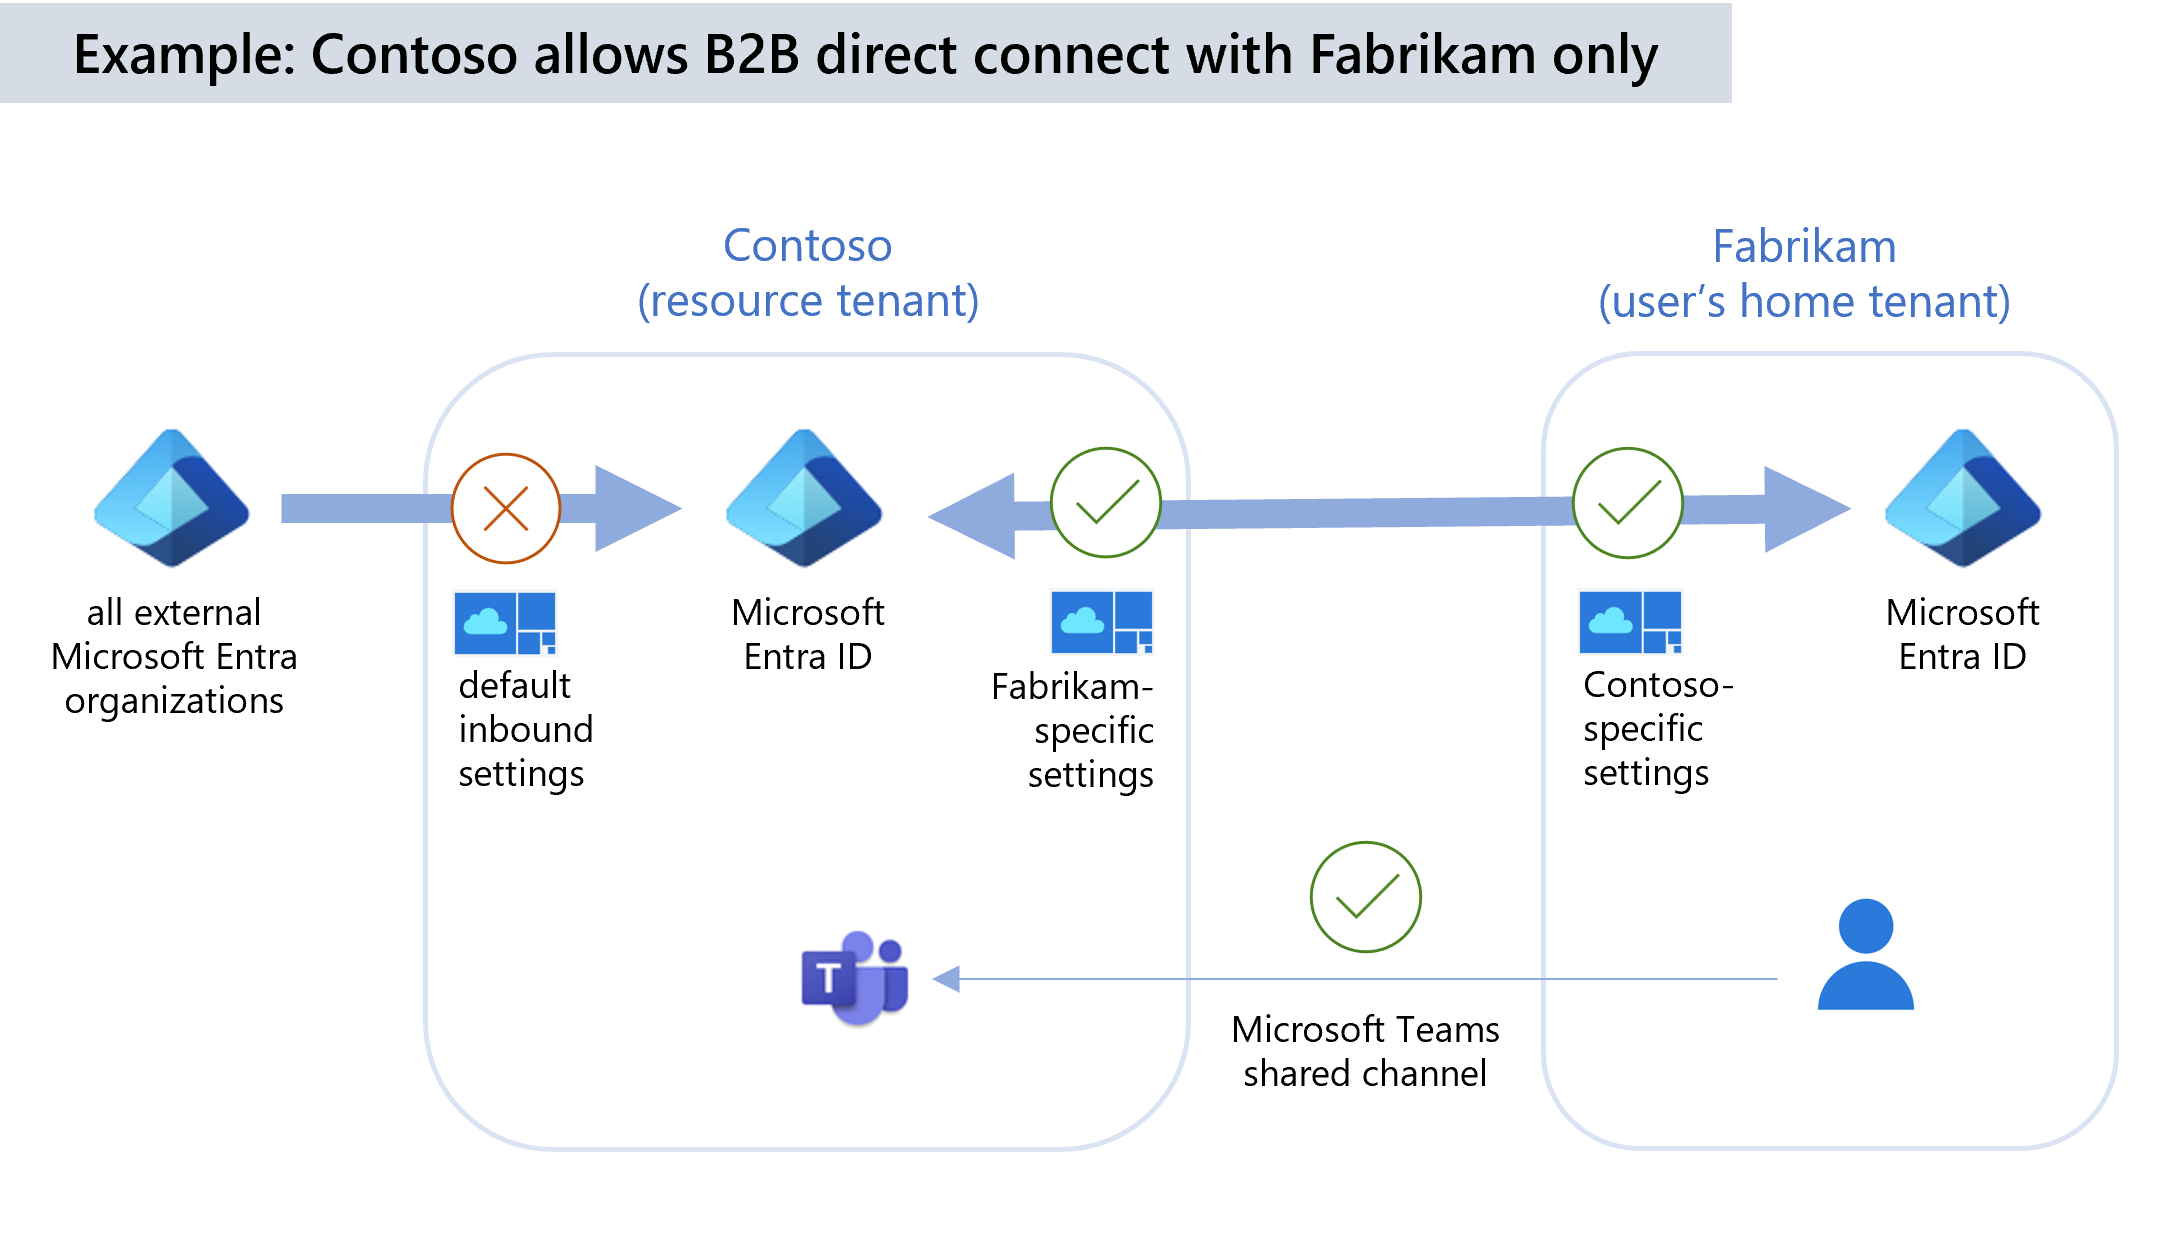 Contoh pemblokiran B2B direct connect secara default tetapi mengizinkan org.